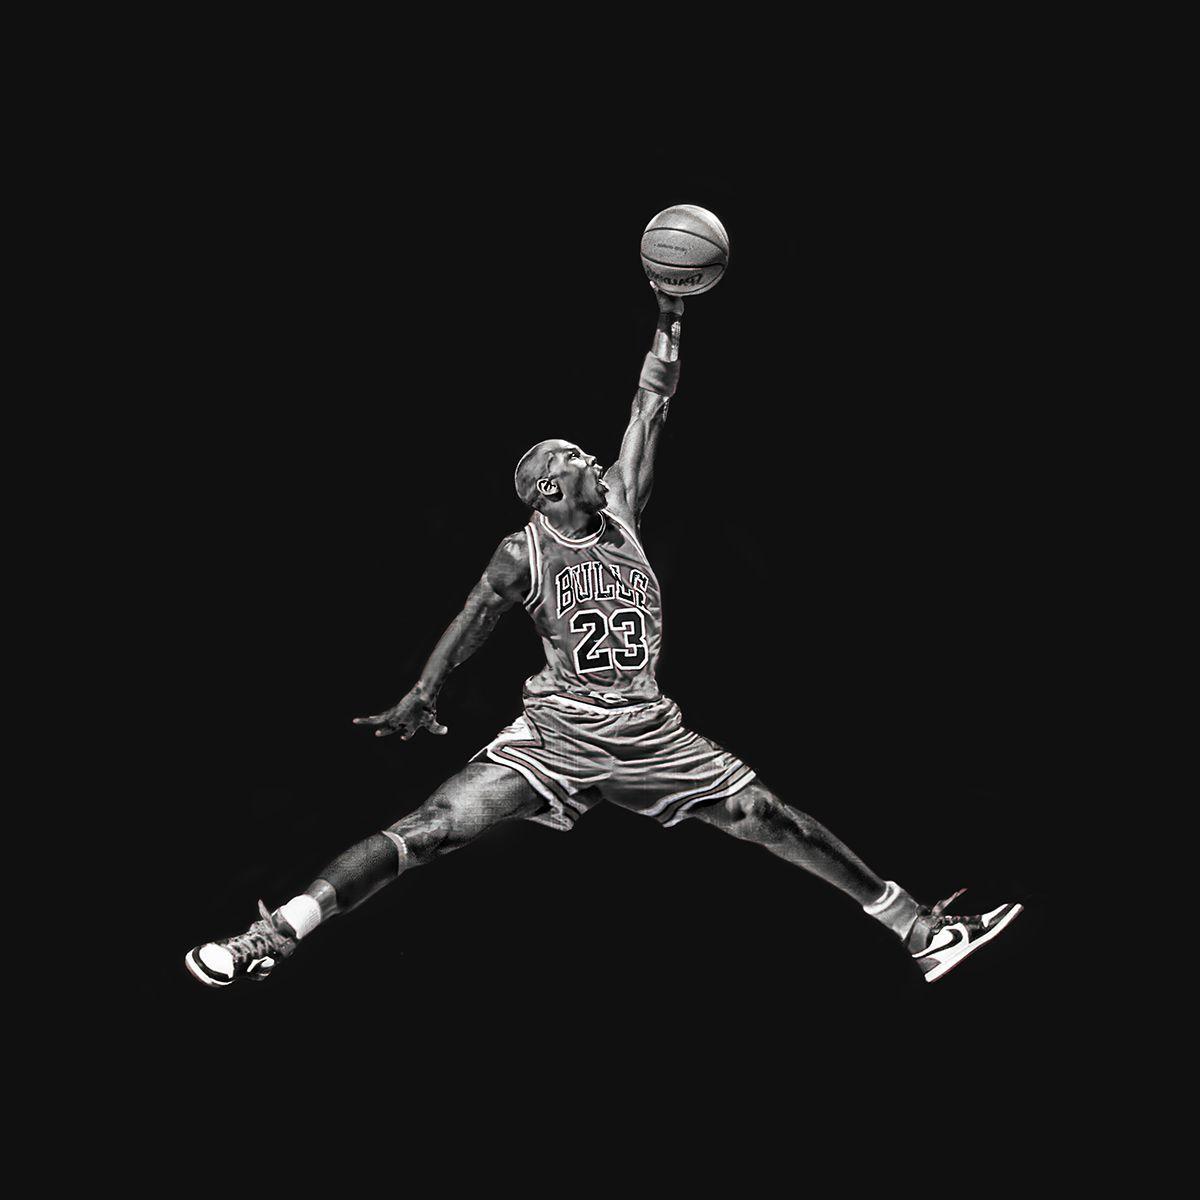 Jordan Jumpman Logo - Jumpman Logo in Real Life on Behance | Sports Design | Pinterest ...